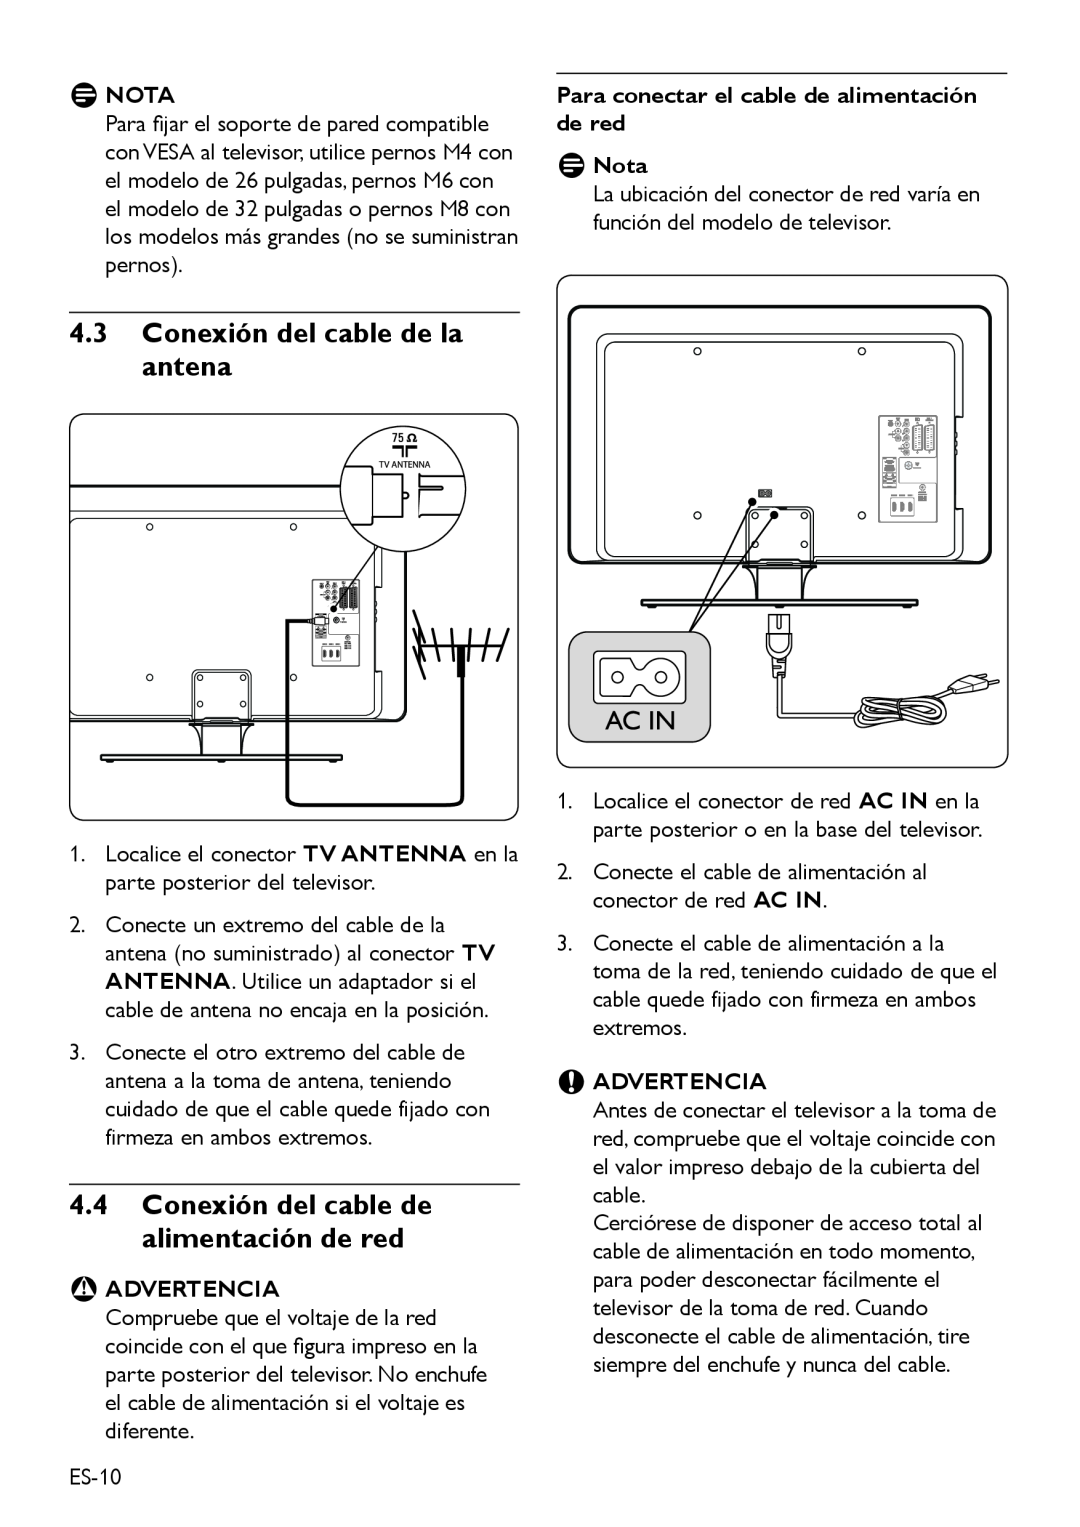 Philips DFU-DEC2008 manual 4.3Conexión del cable de la antena, 4.4Conexión del cable de alimentación de red, Ddnota, DDNota 